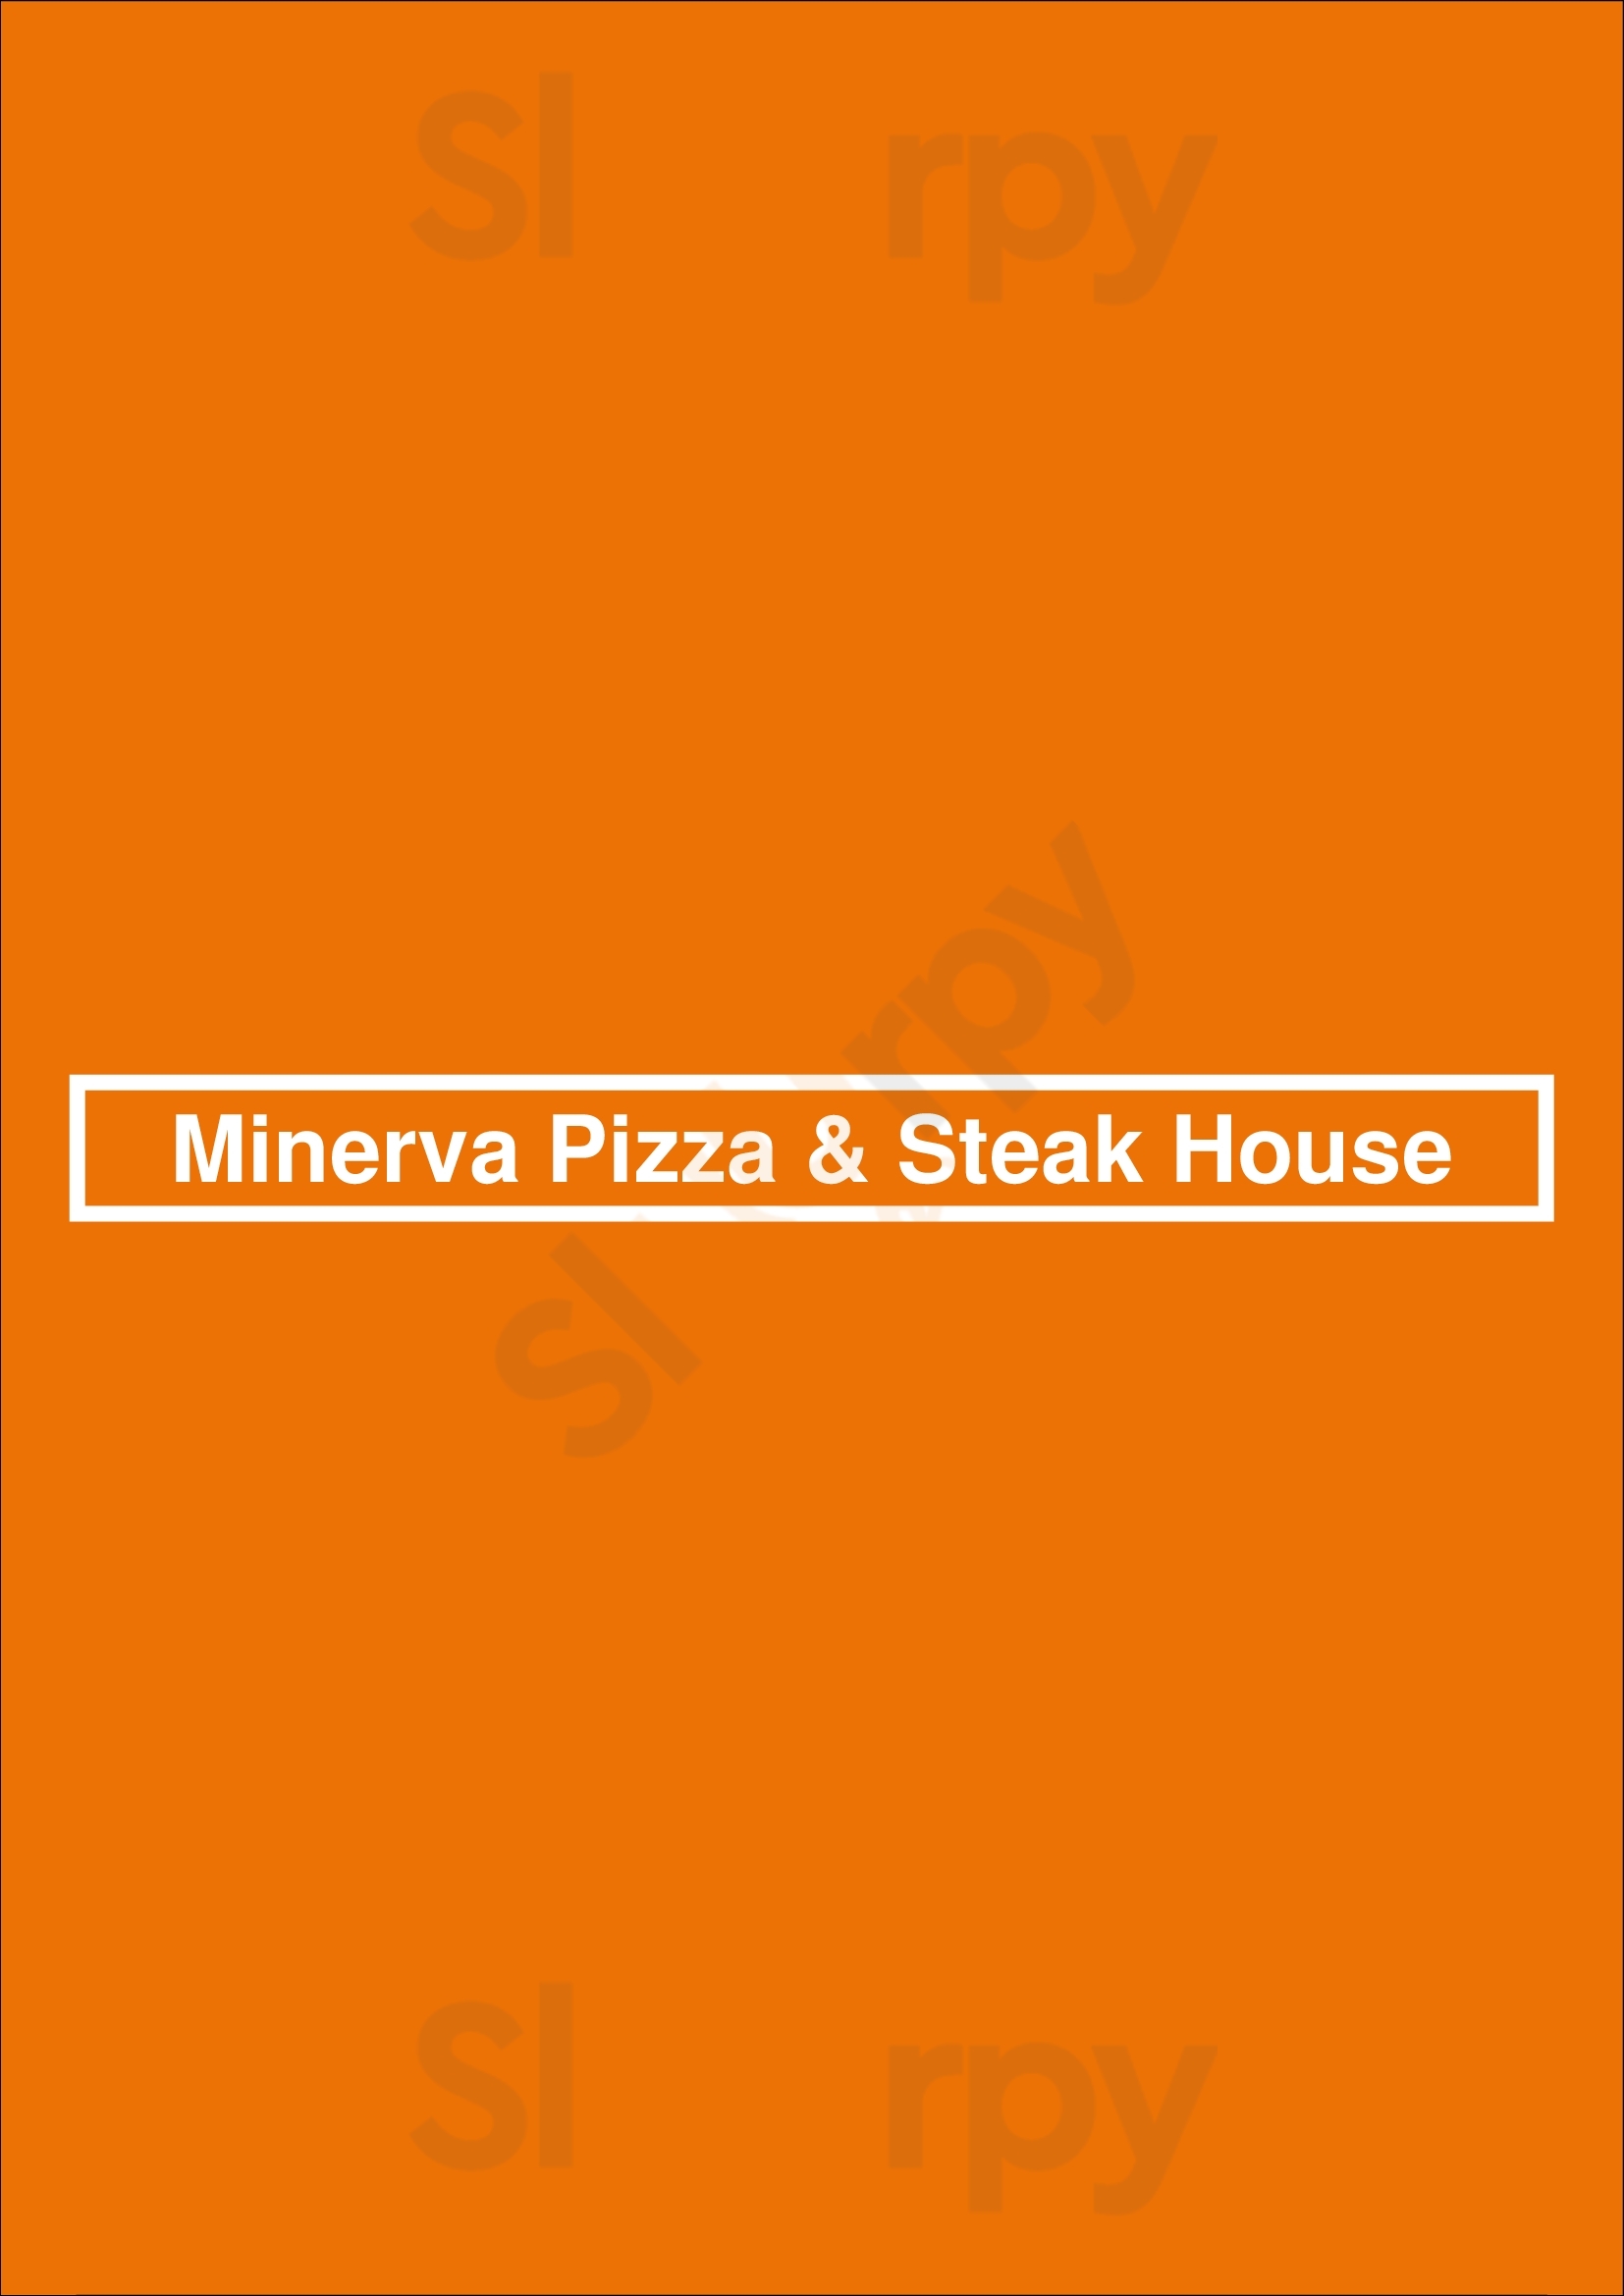 Minerva Pizza & Steak House Vancouver Menu - 1